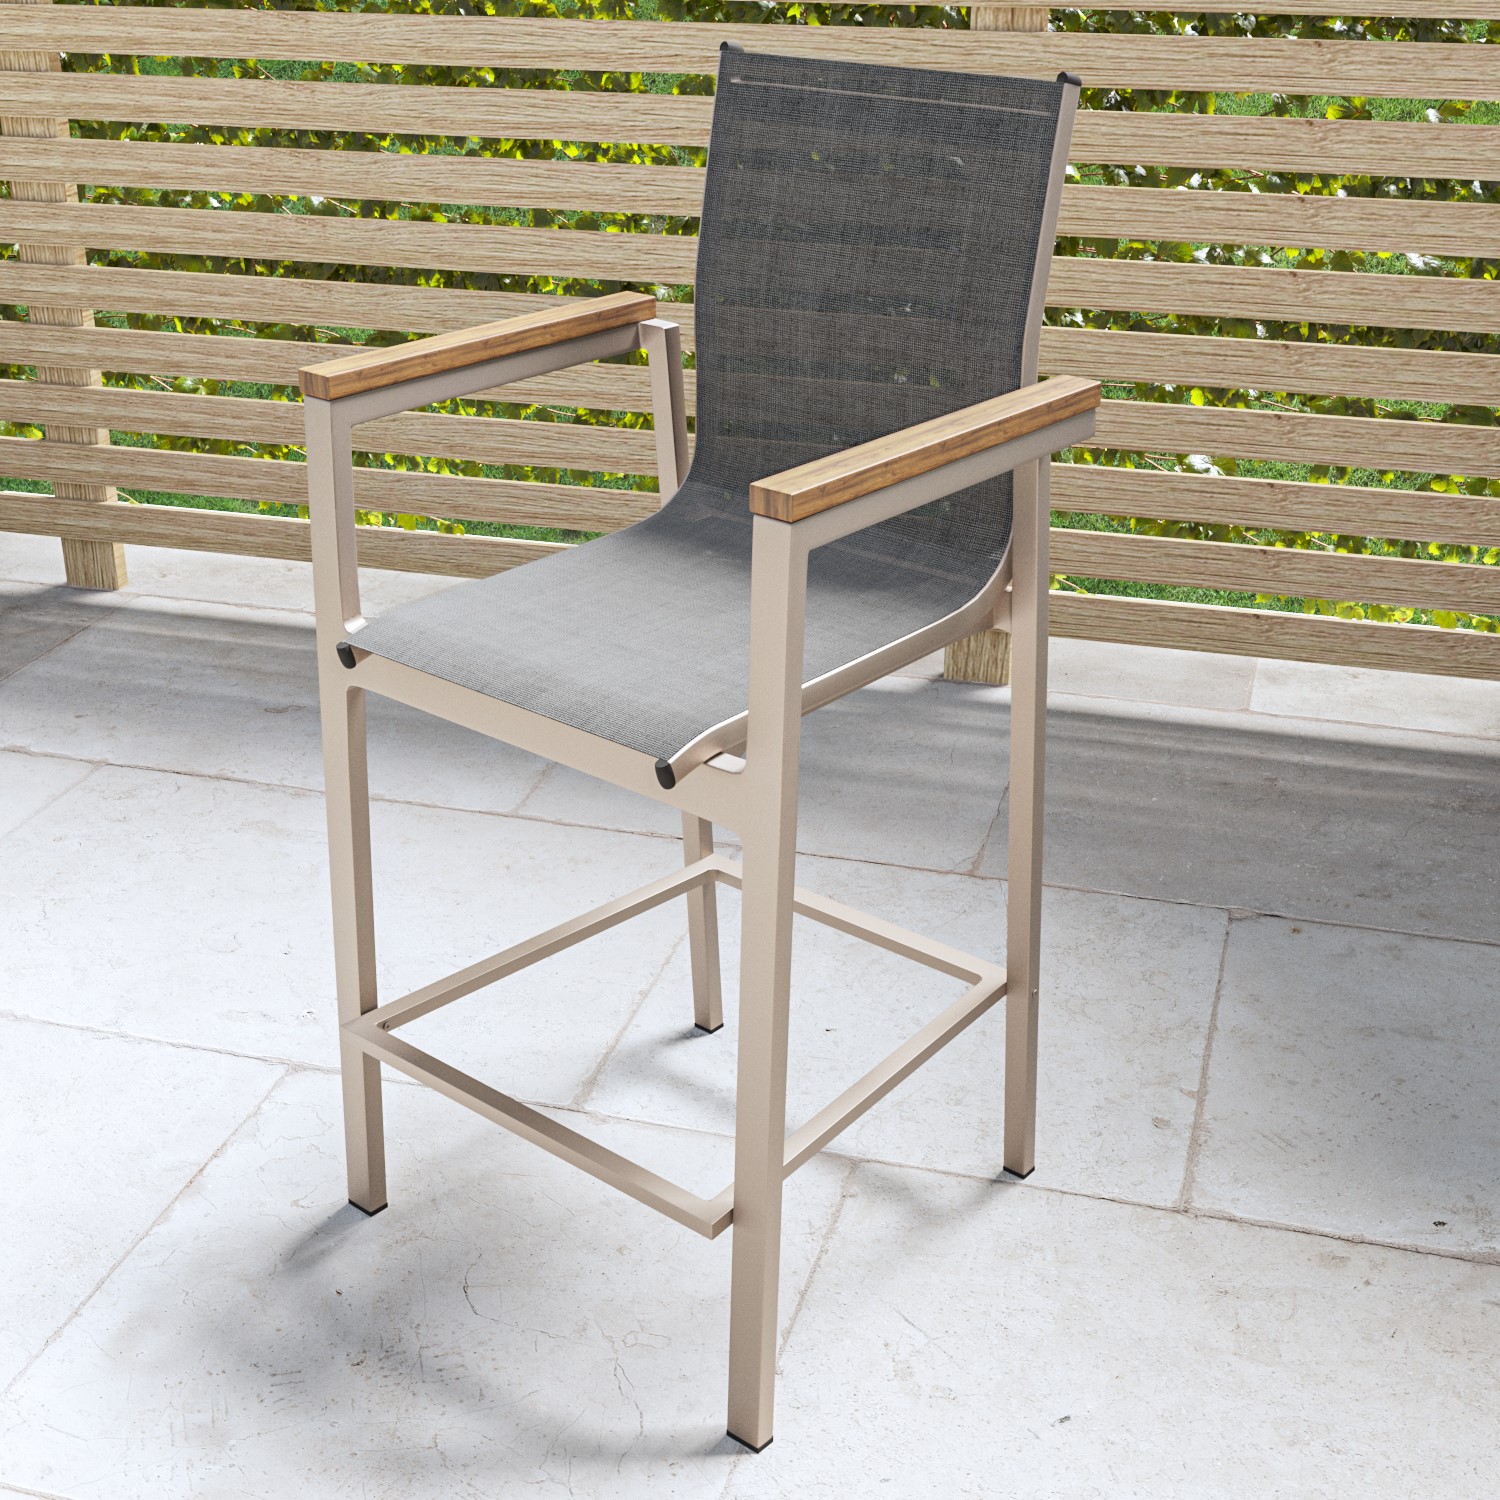 Read more about 4 stools wood effect & aluminium garden bar set como